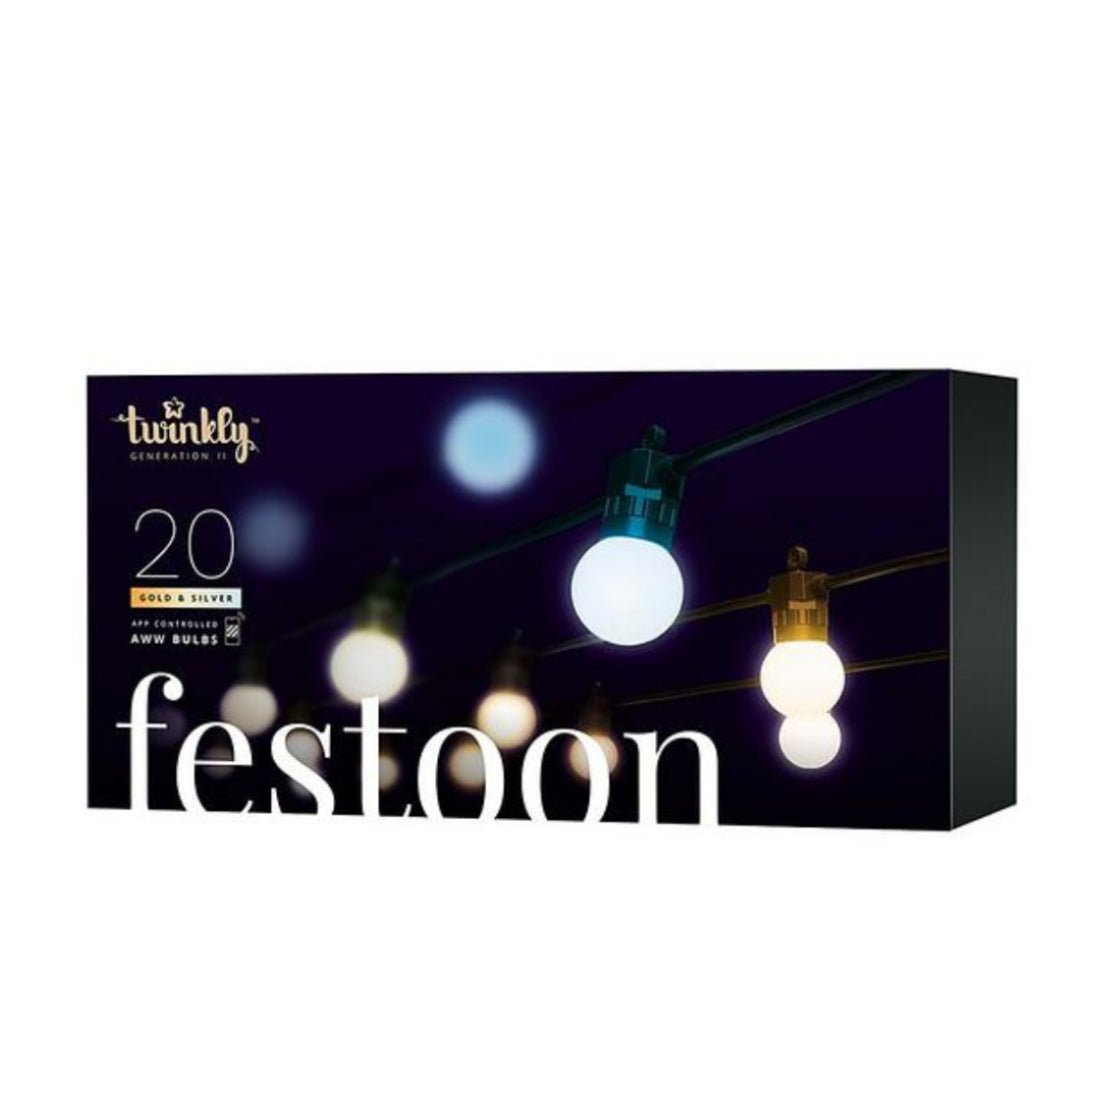 Twinkly Festoon 20 App-Controlled RGB Light Bulbs - Black Wire - إضاءة - Store 974 | ستور ٩٧٤